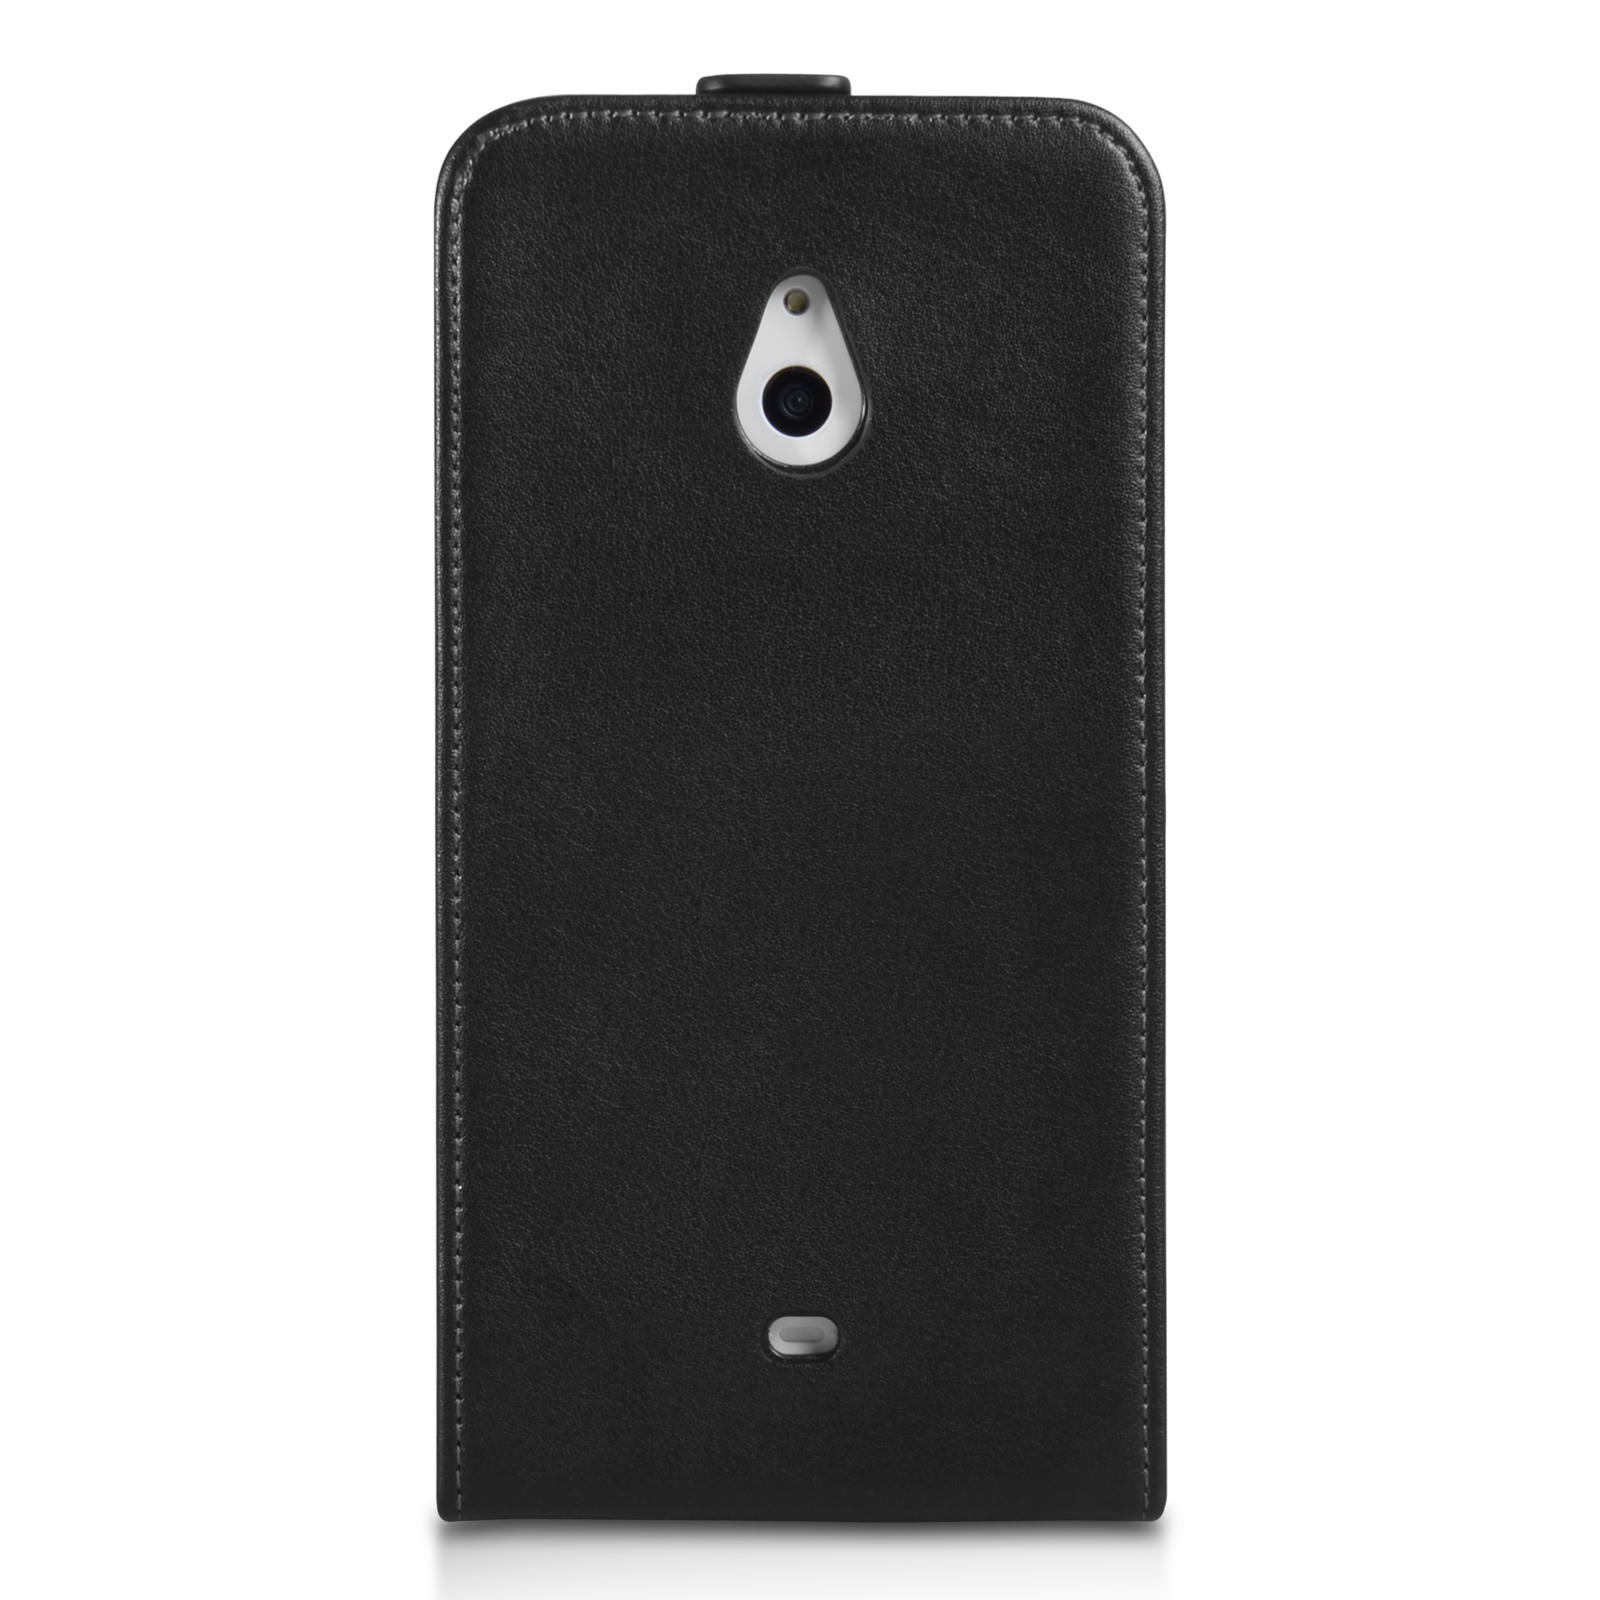 Caseflex Nokia Lumia 1320 Real Leather Flip Case - Black